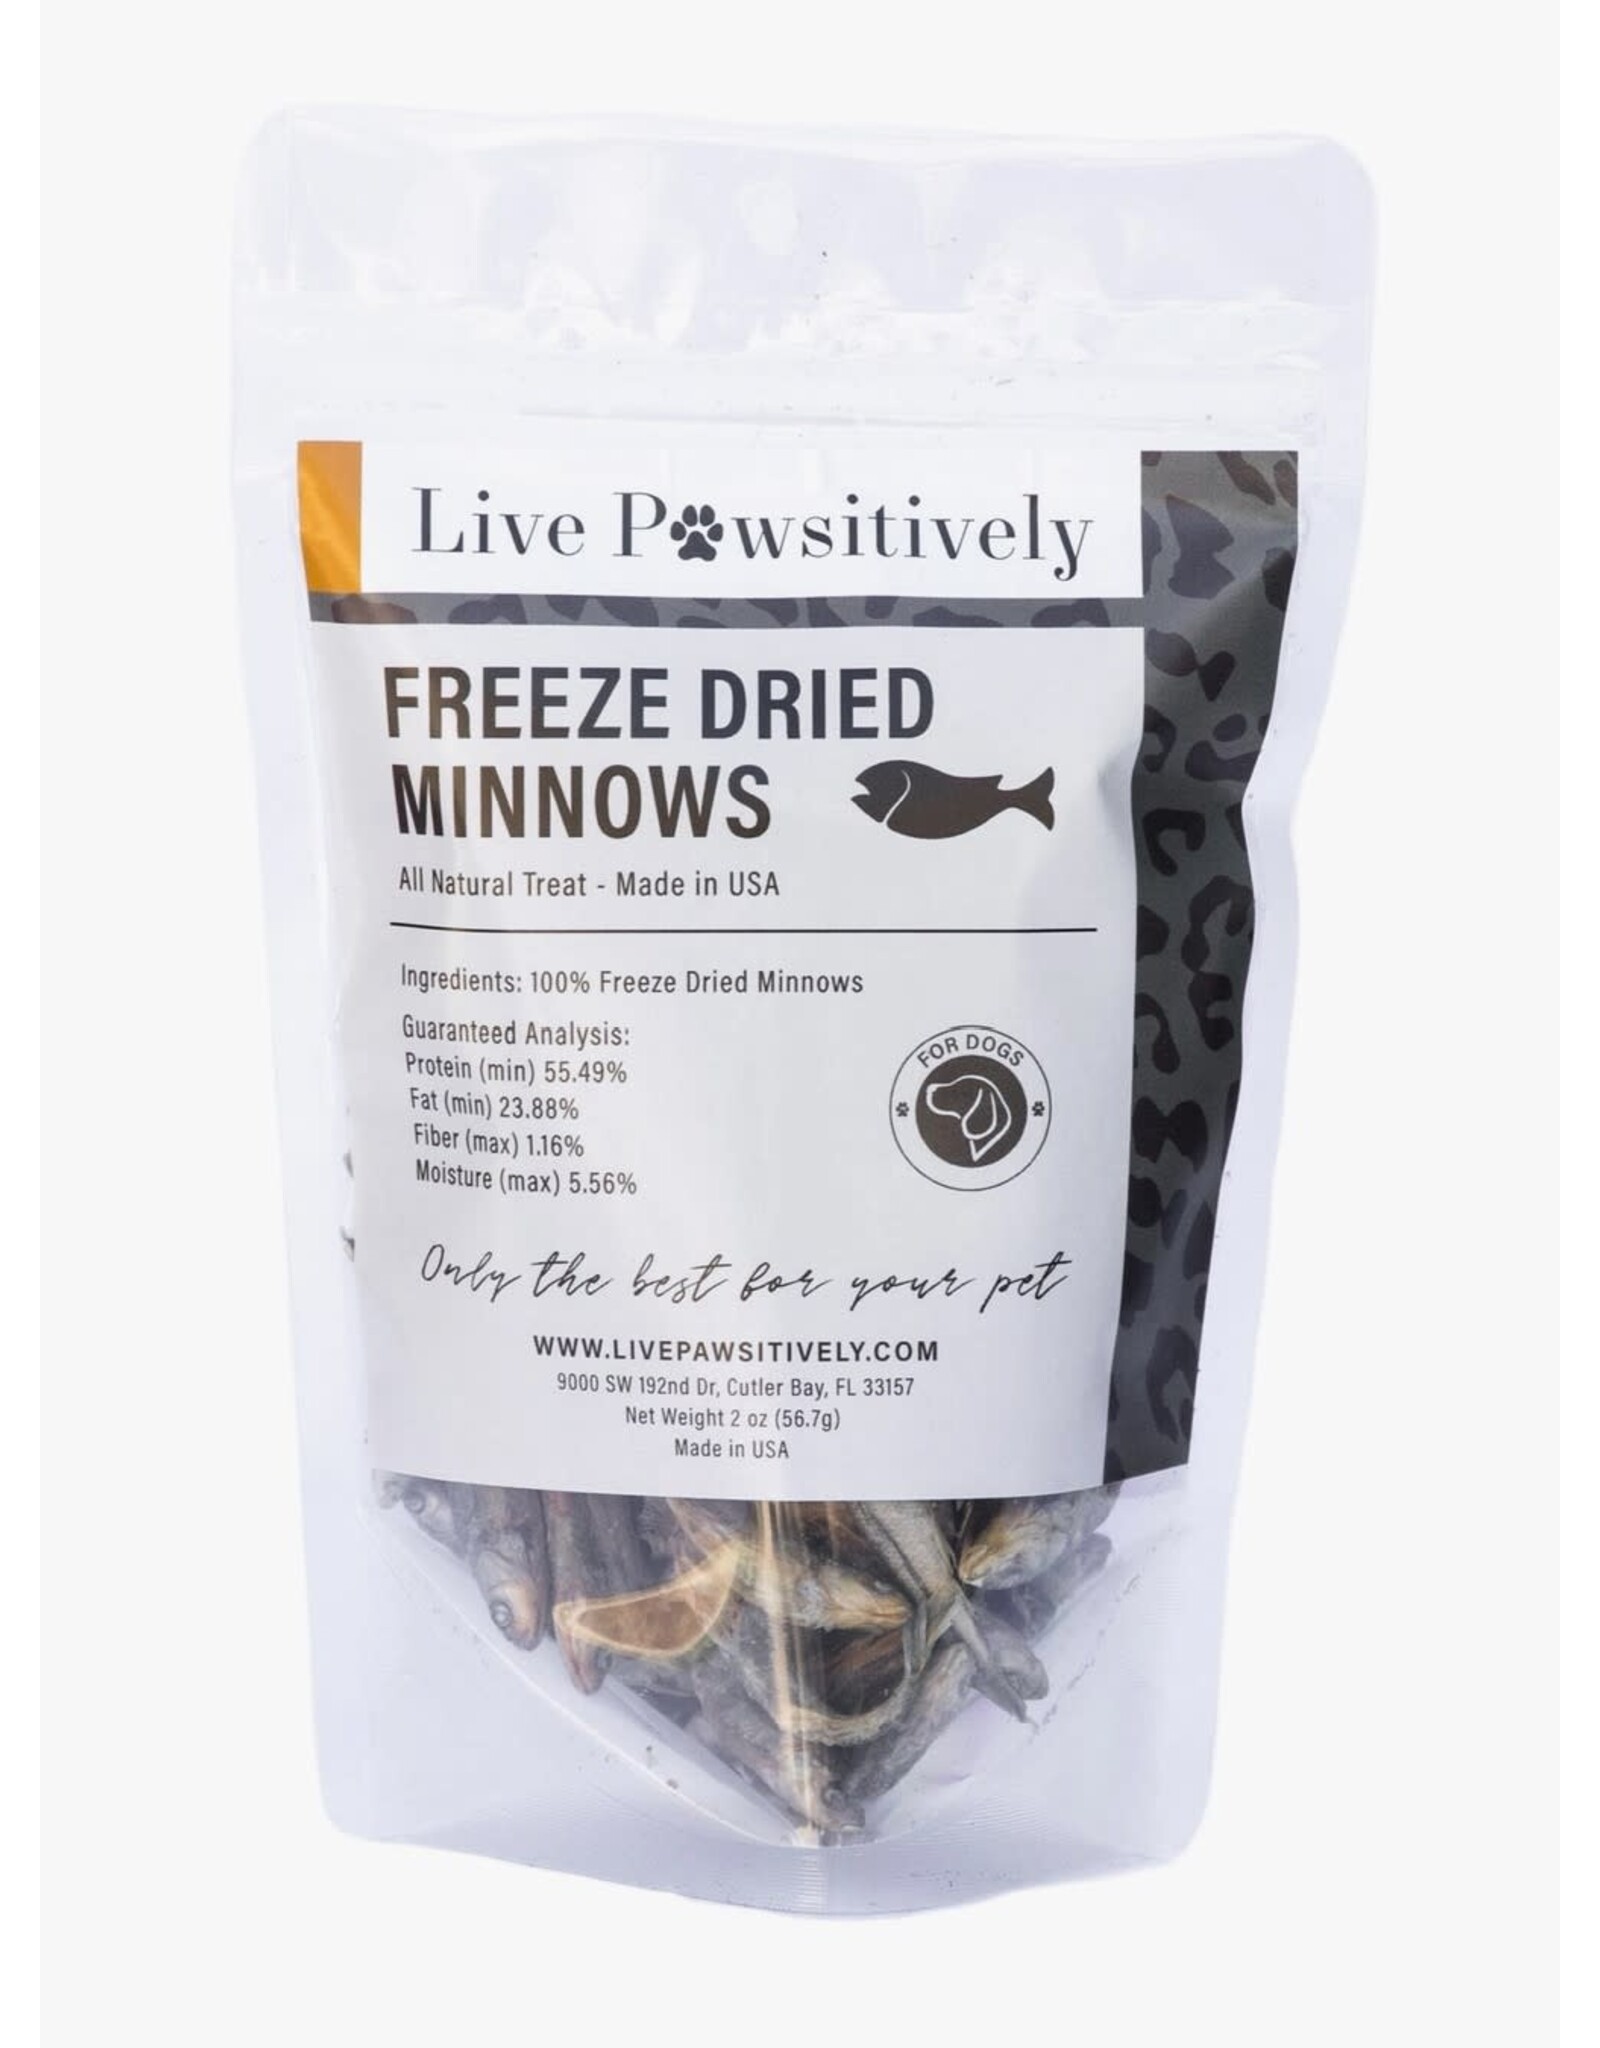 Live Pawsitive Freeze Dried Minnows